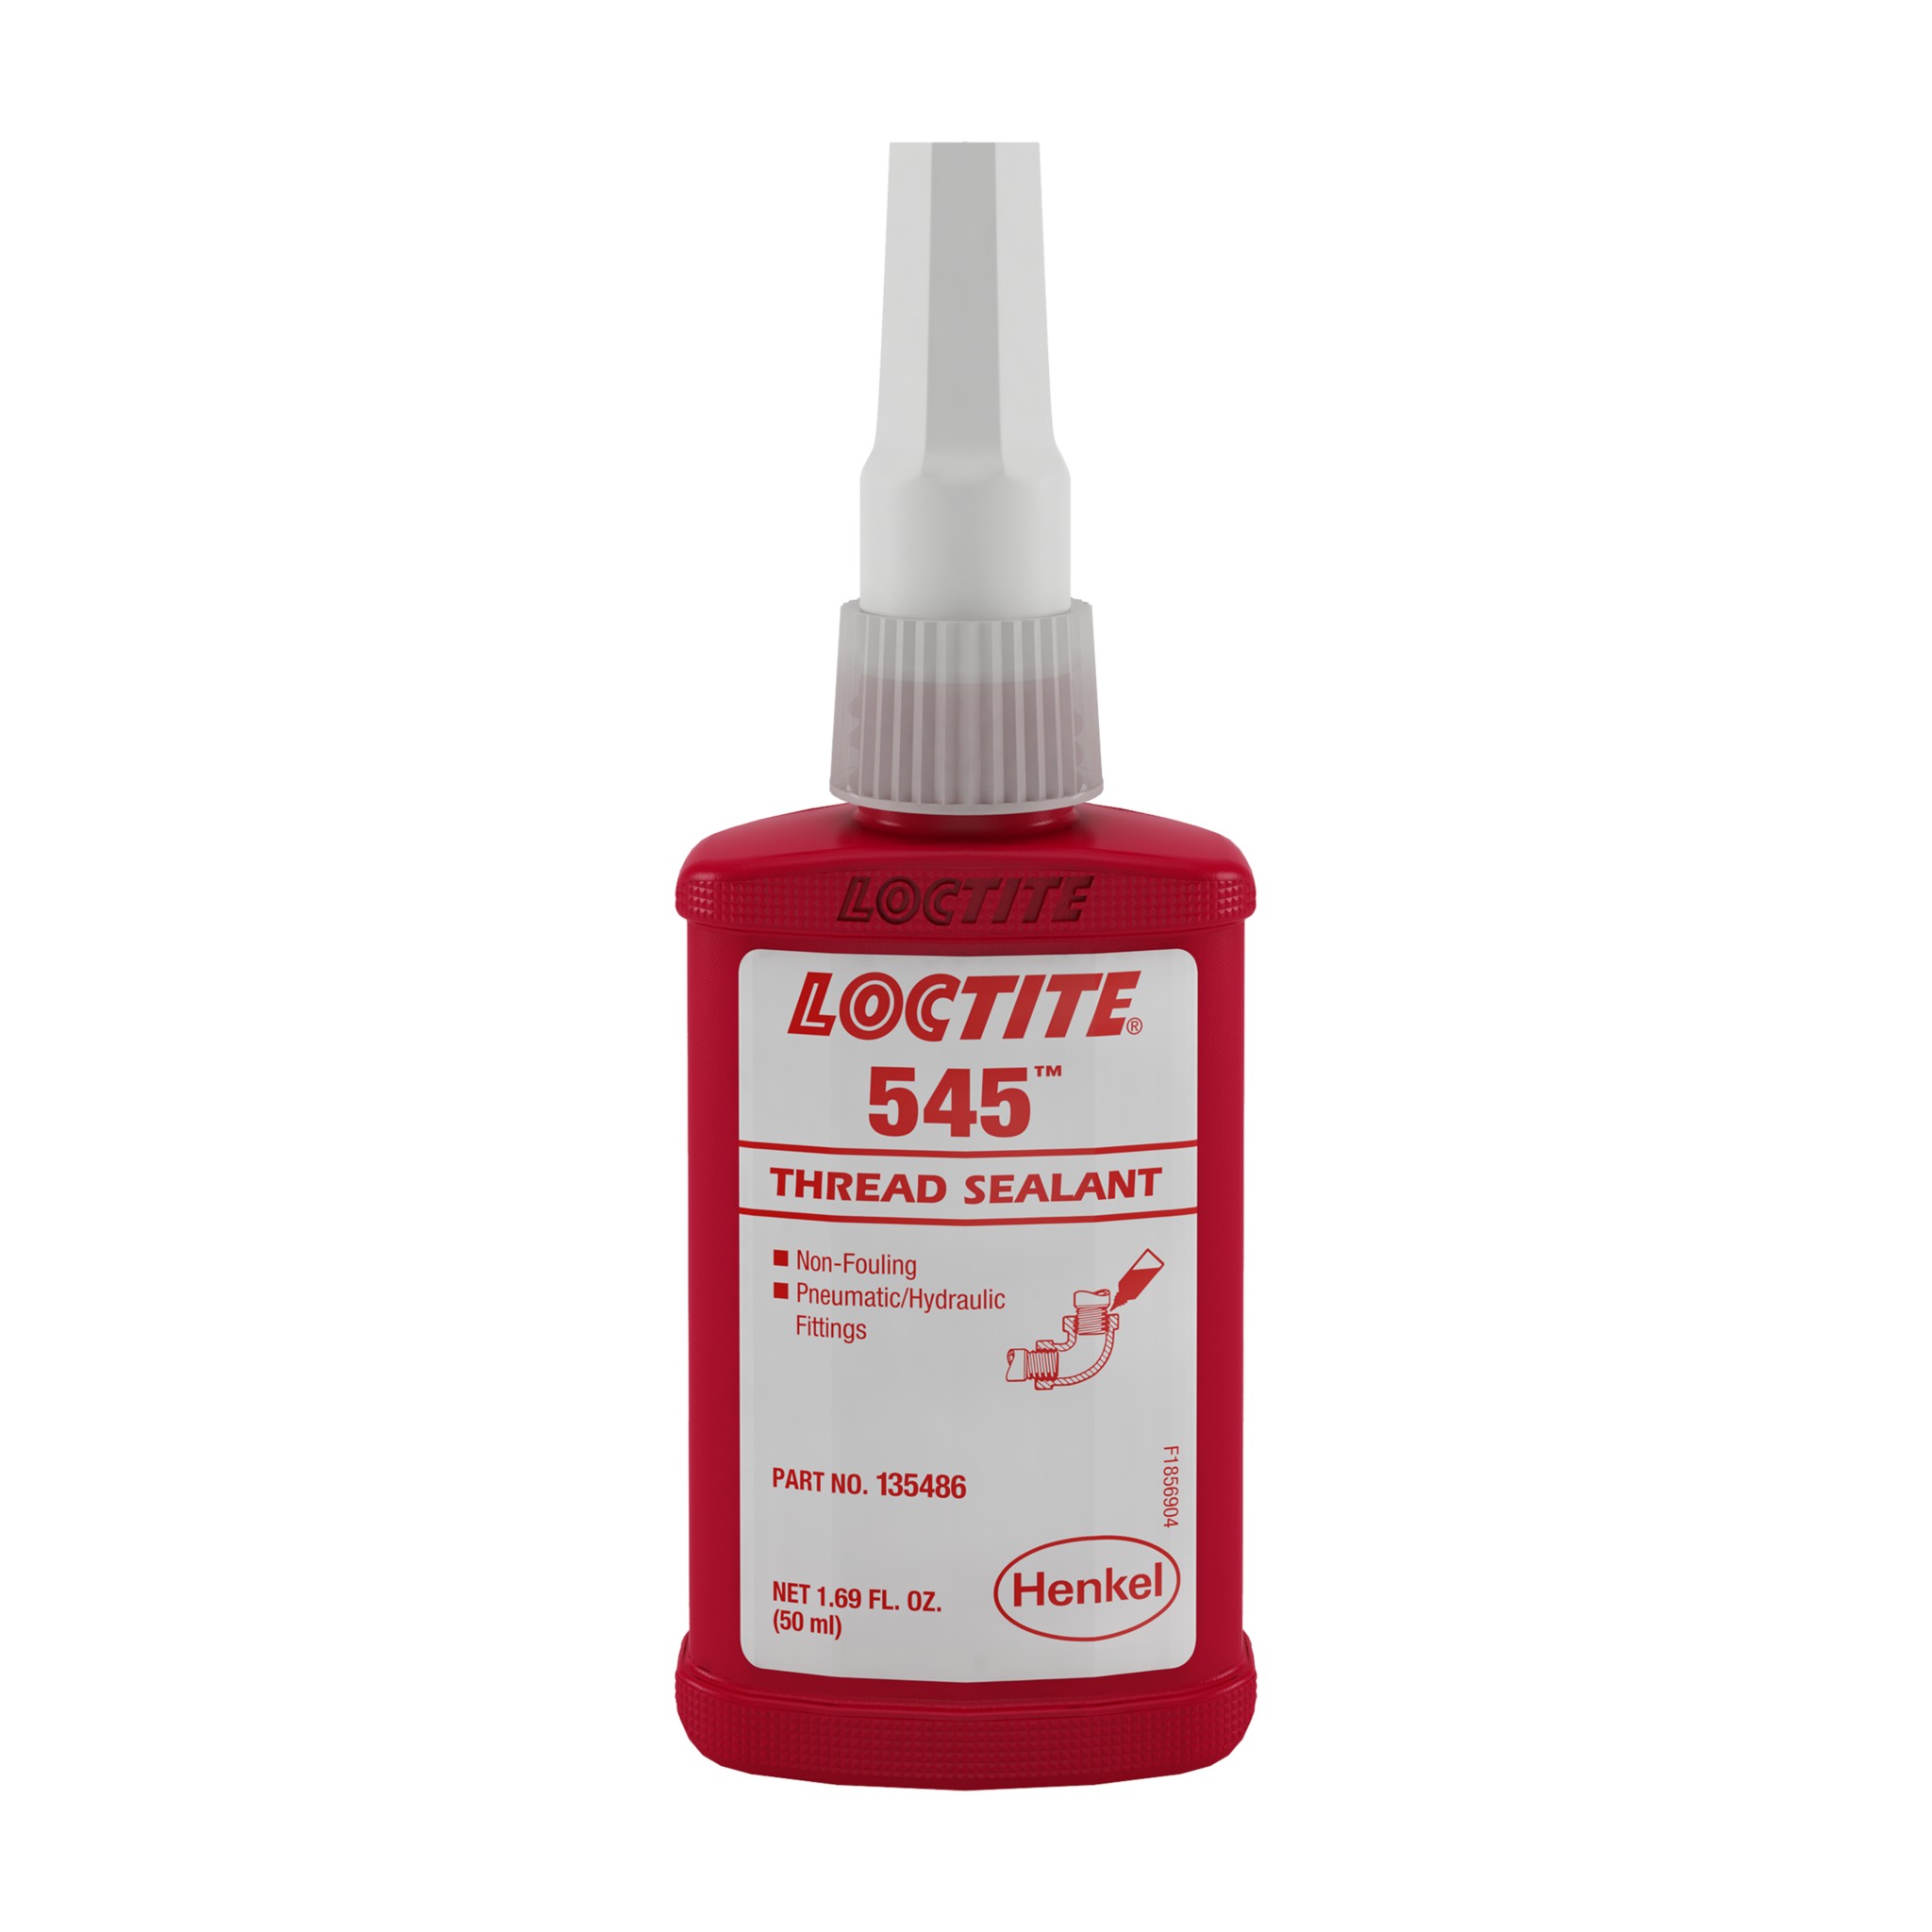 LOCTITE 545 - Thread Sealant - High-lubricity thread sealant for